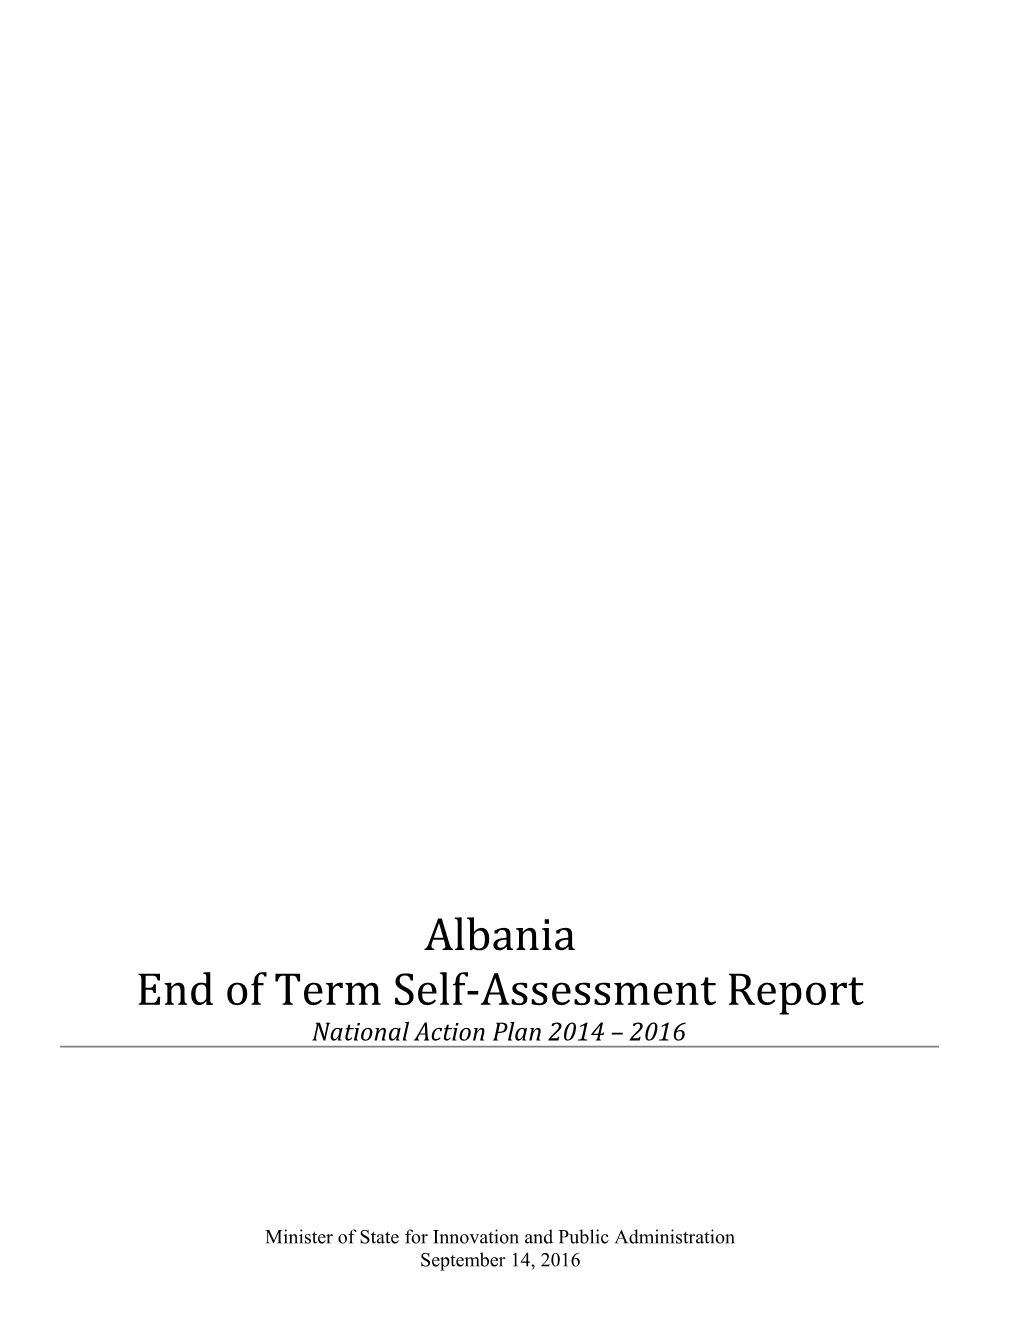 Albania End-Term Self-Assessmentsecond NAP 2014 - 2016